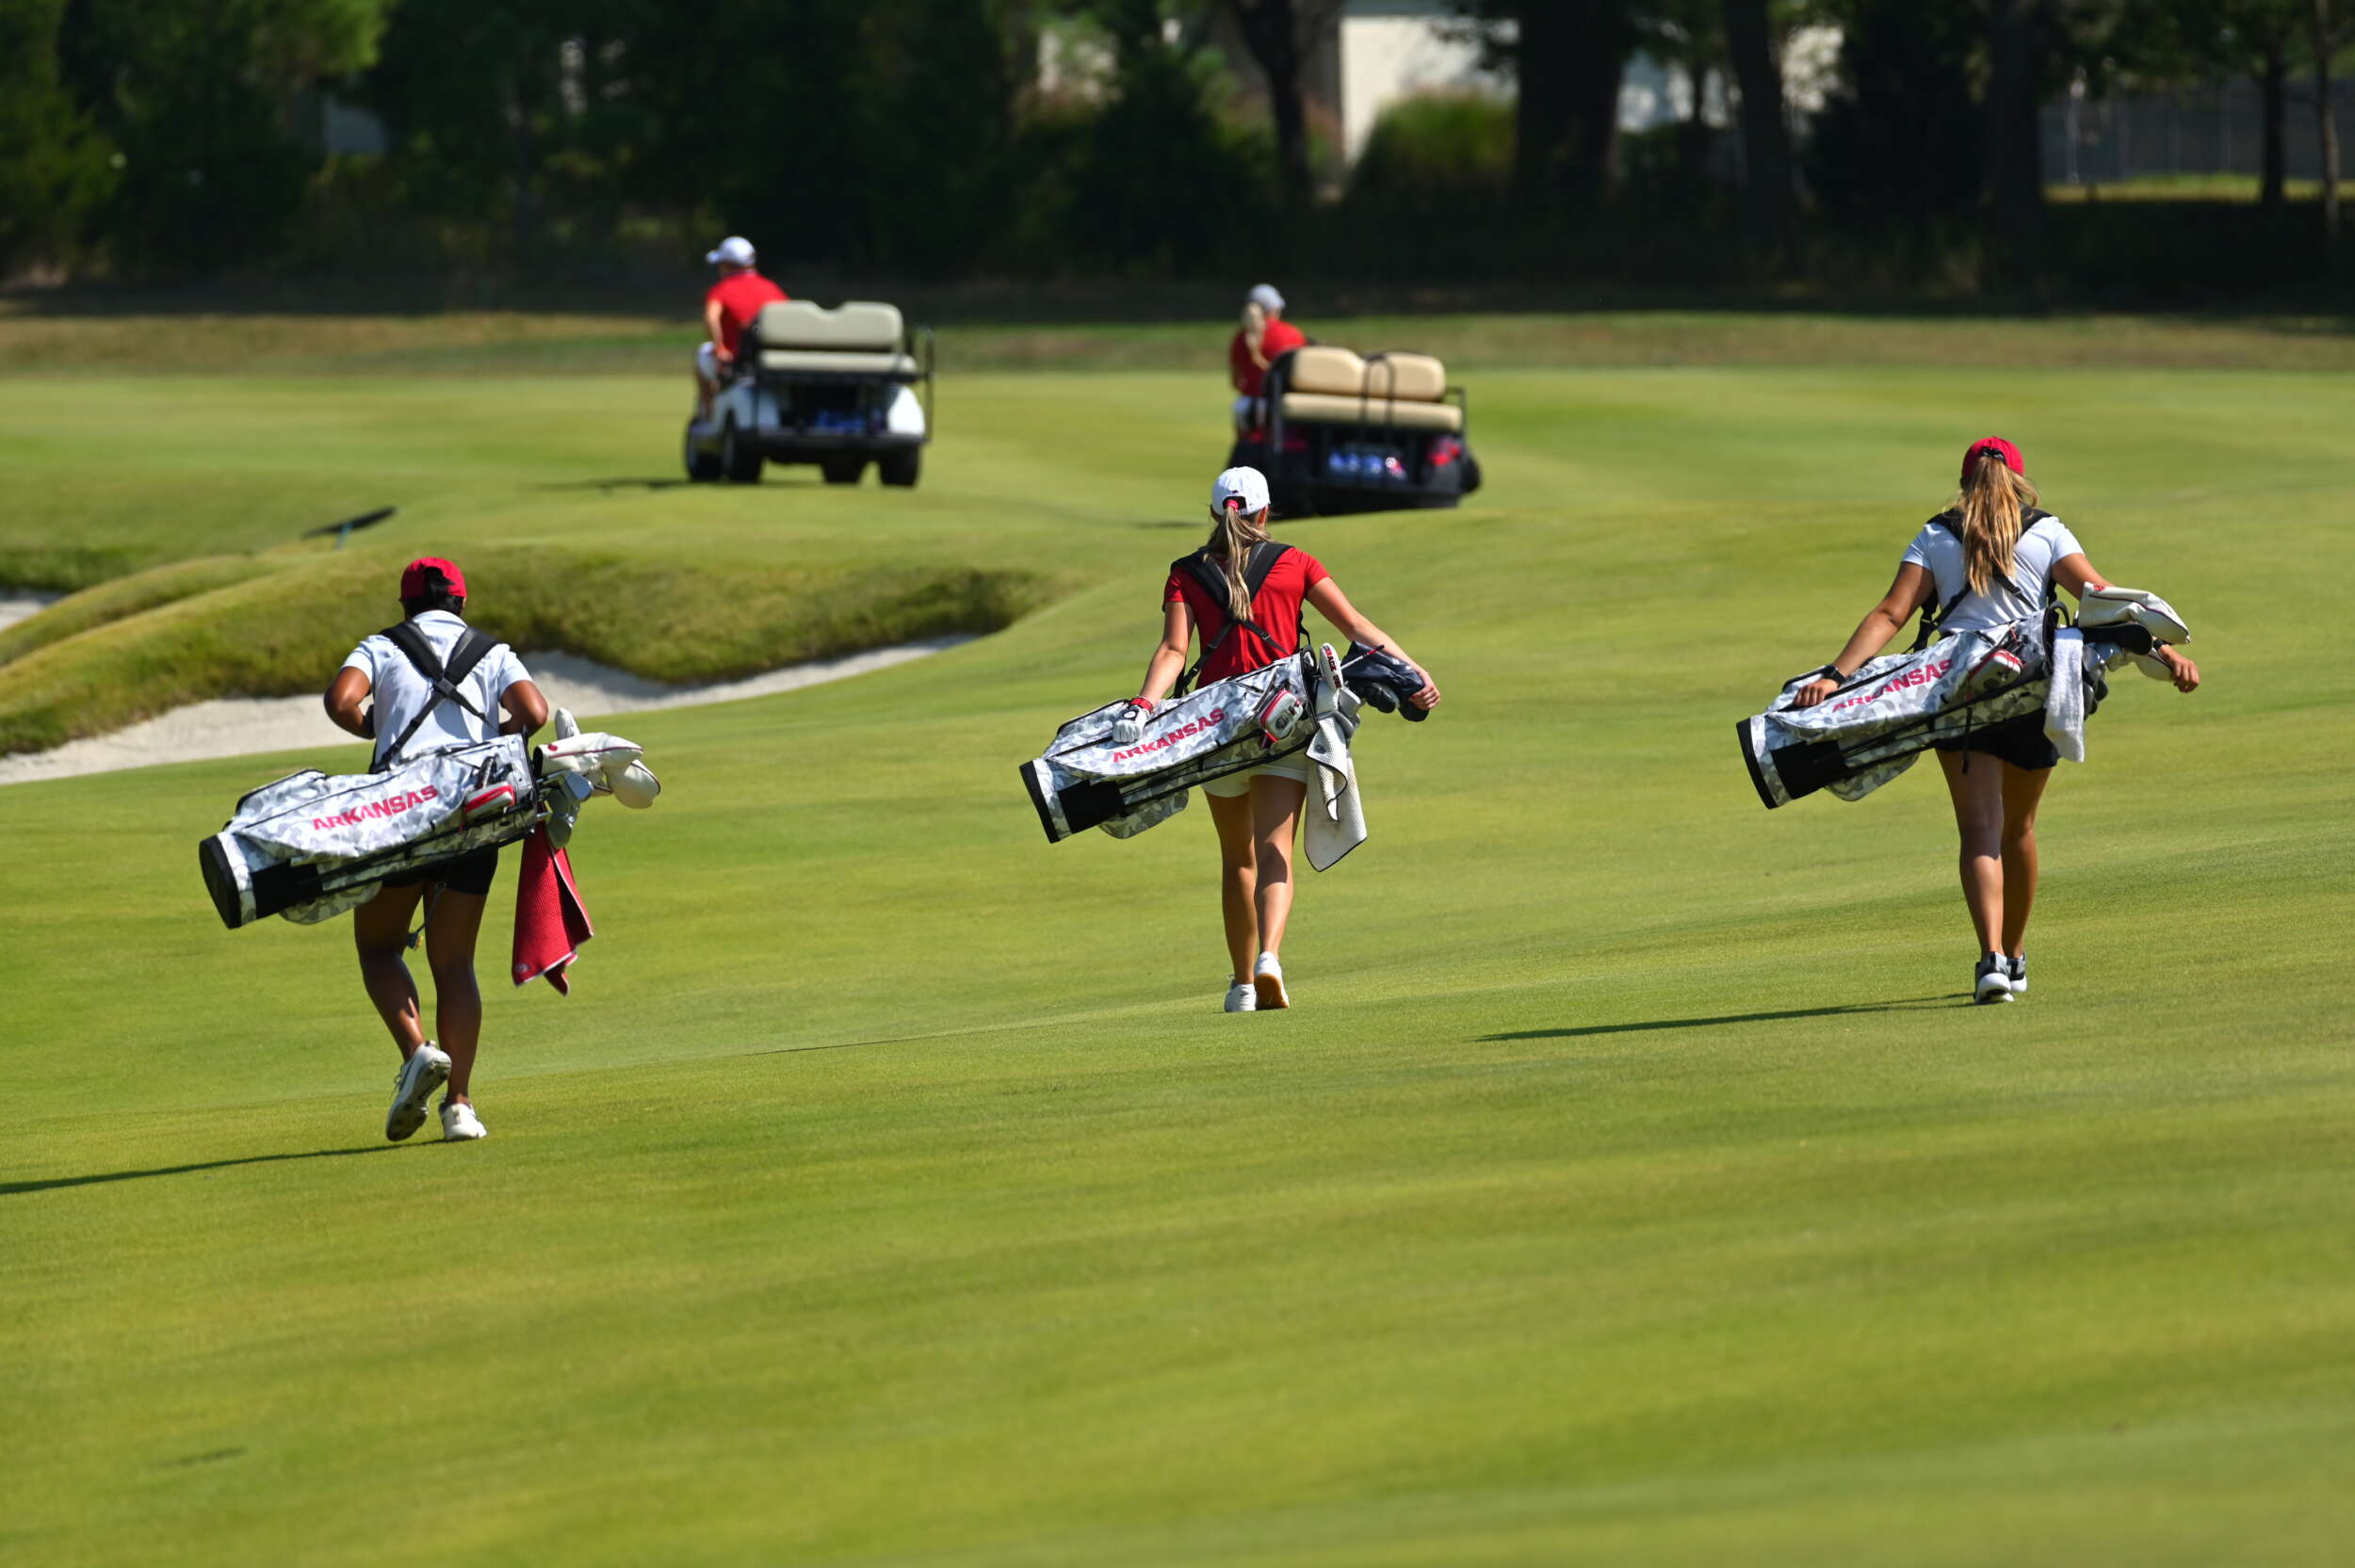 Louisville Cardinals Golf Fairway Stand Bag